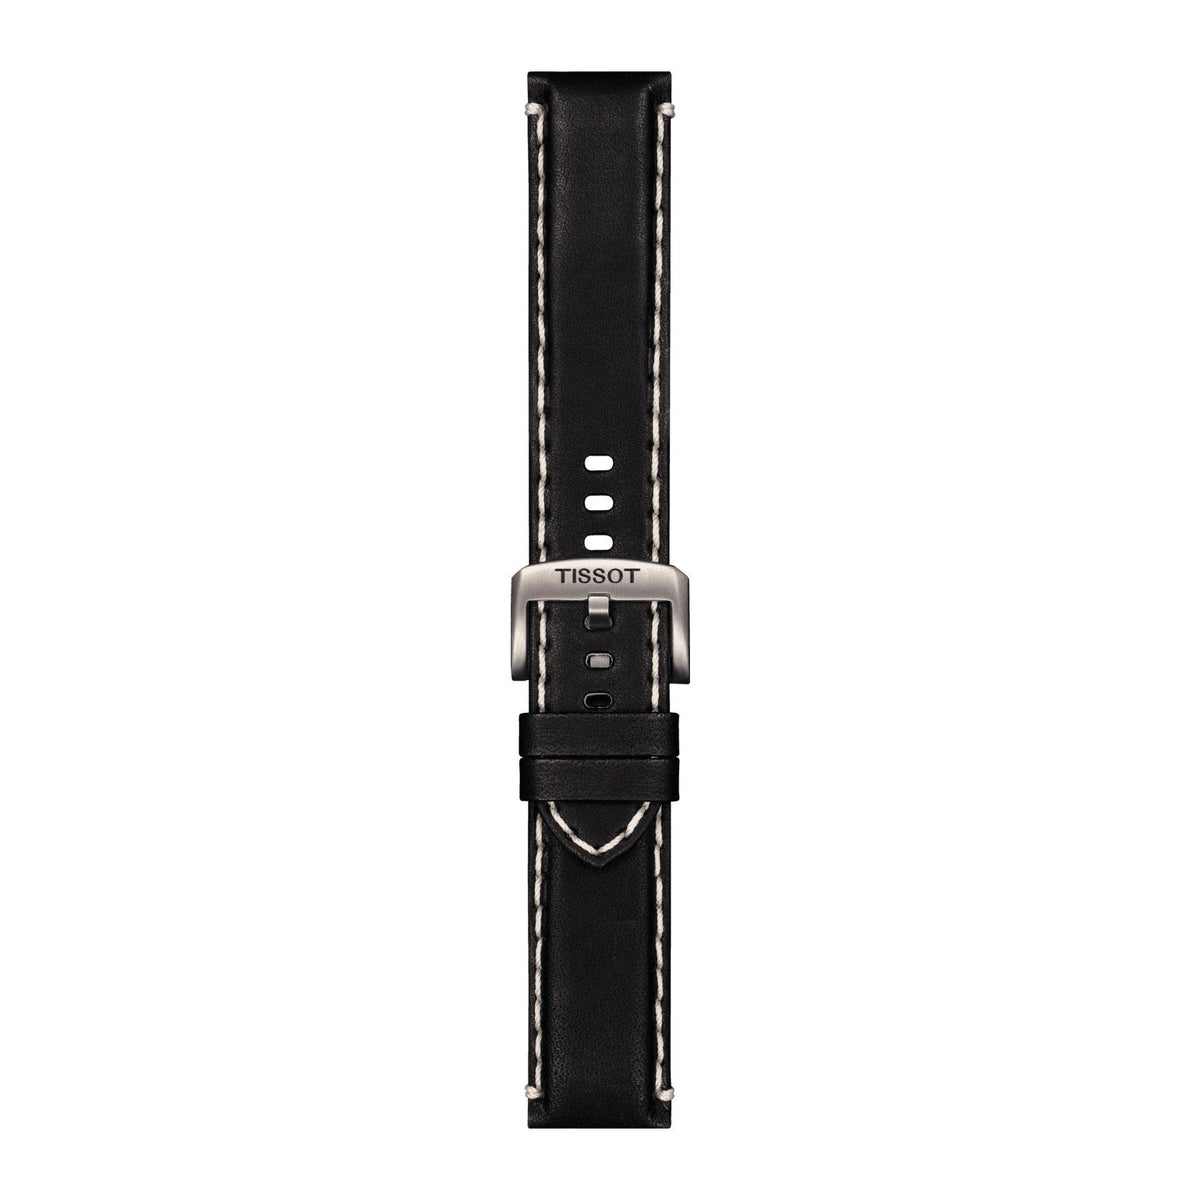 Official Tissot BLACK LEATHER strap ANSA 22 MM T852044982